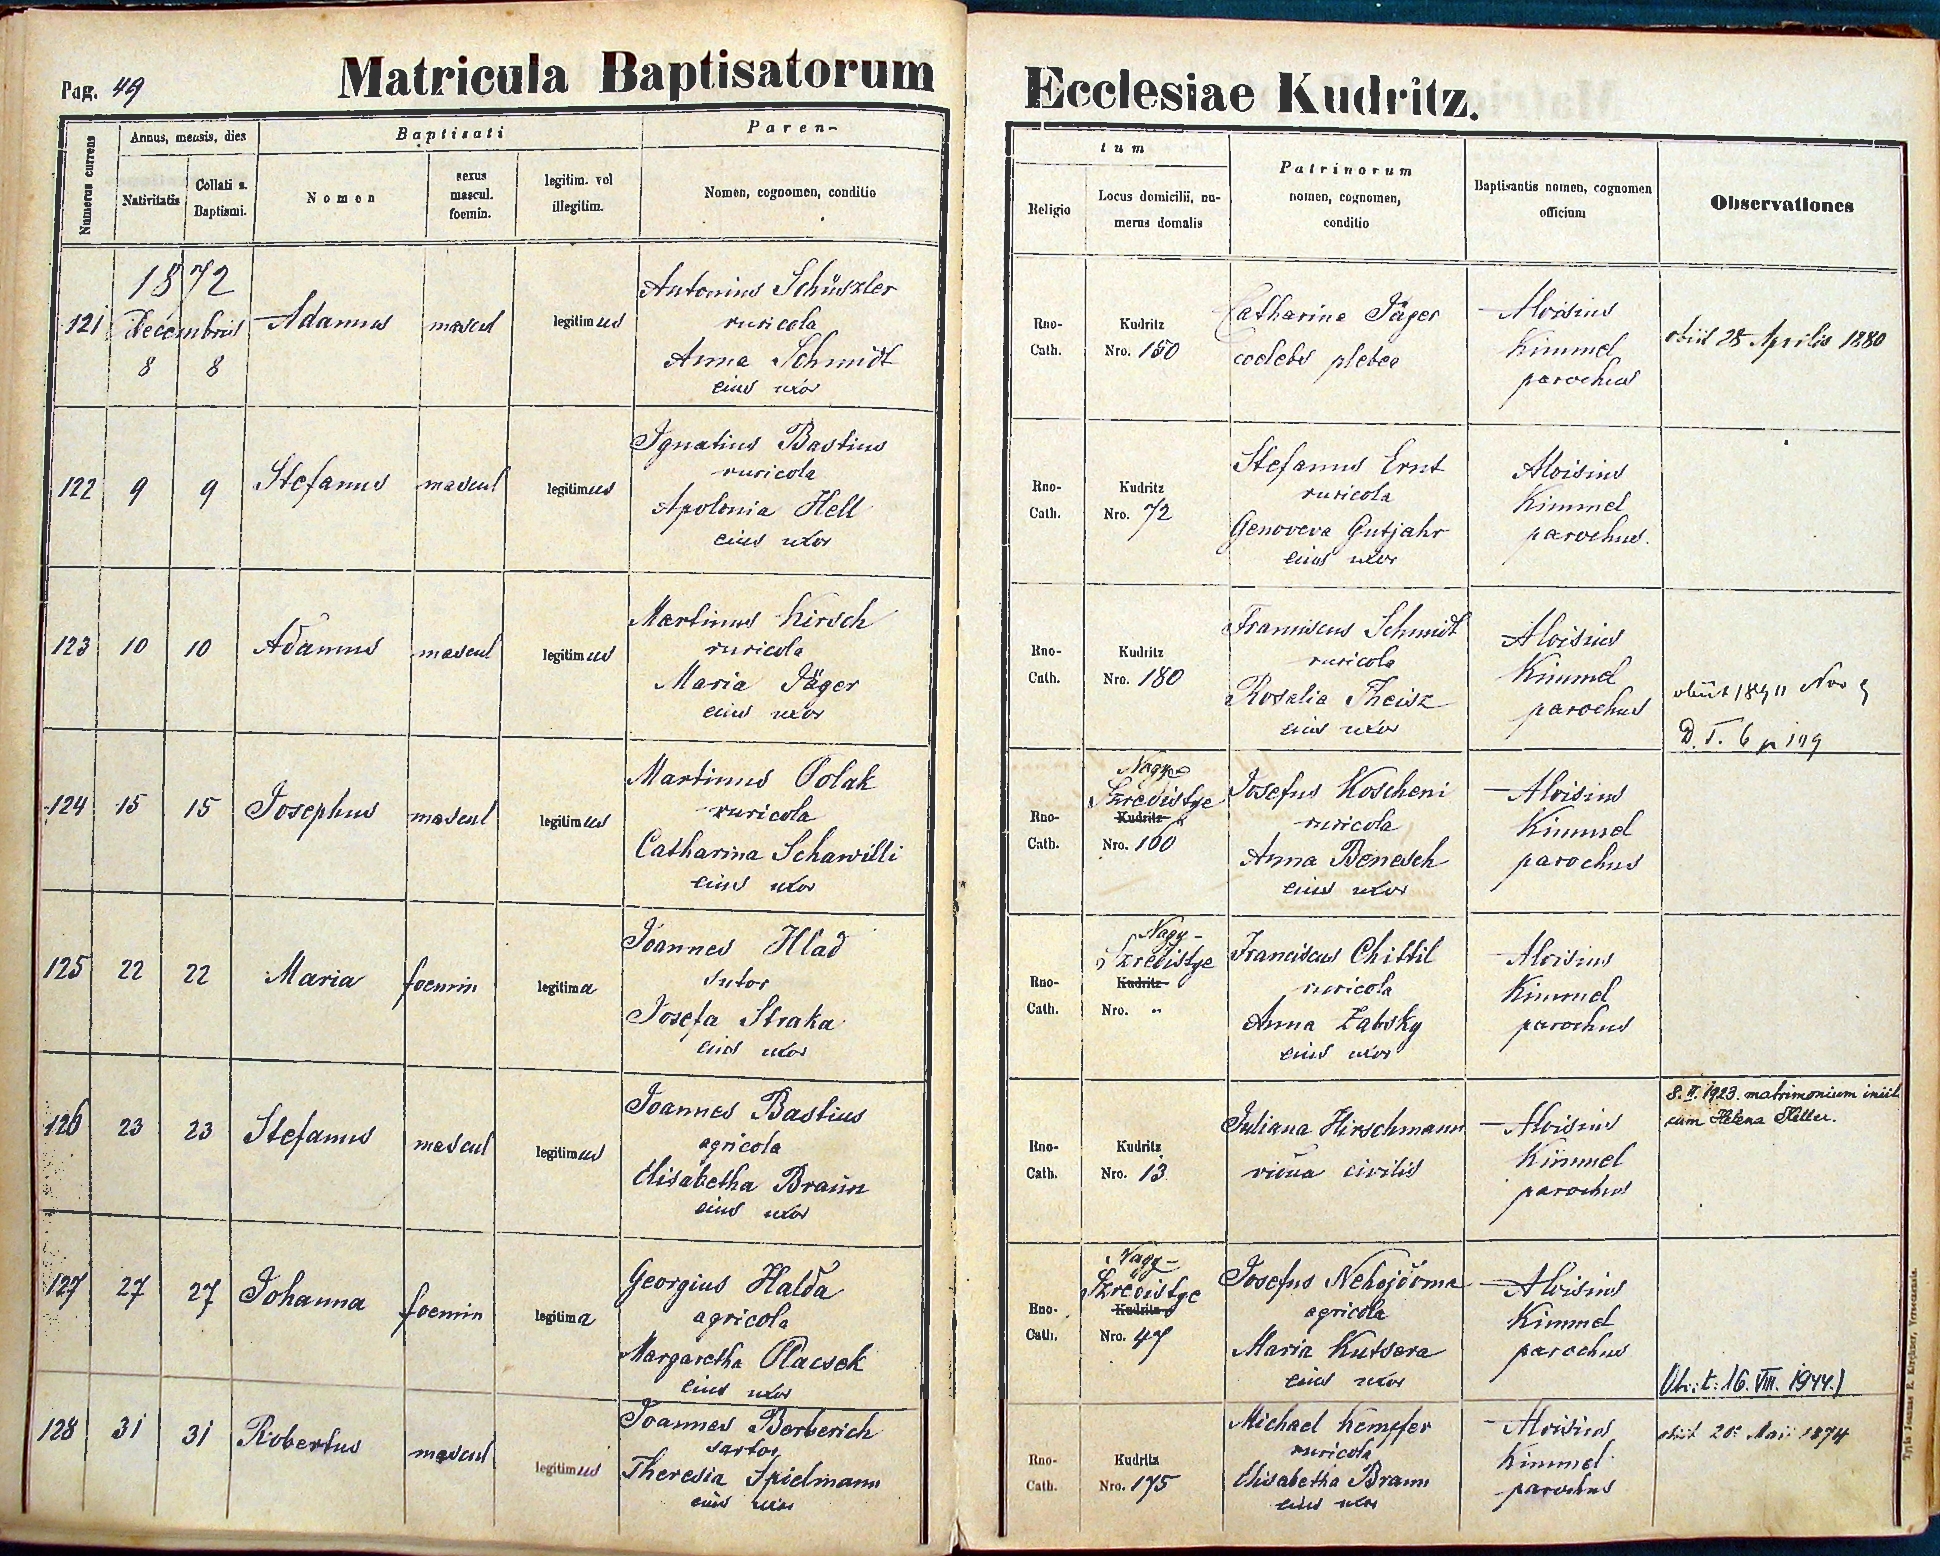 images/church_records/BIRTHS/1884-1899B/1886/049